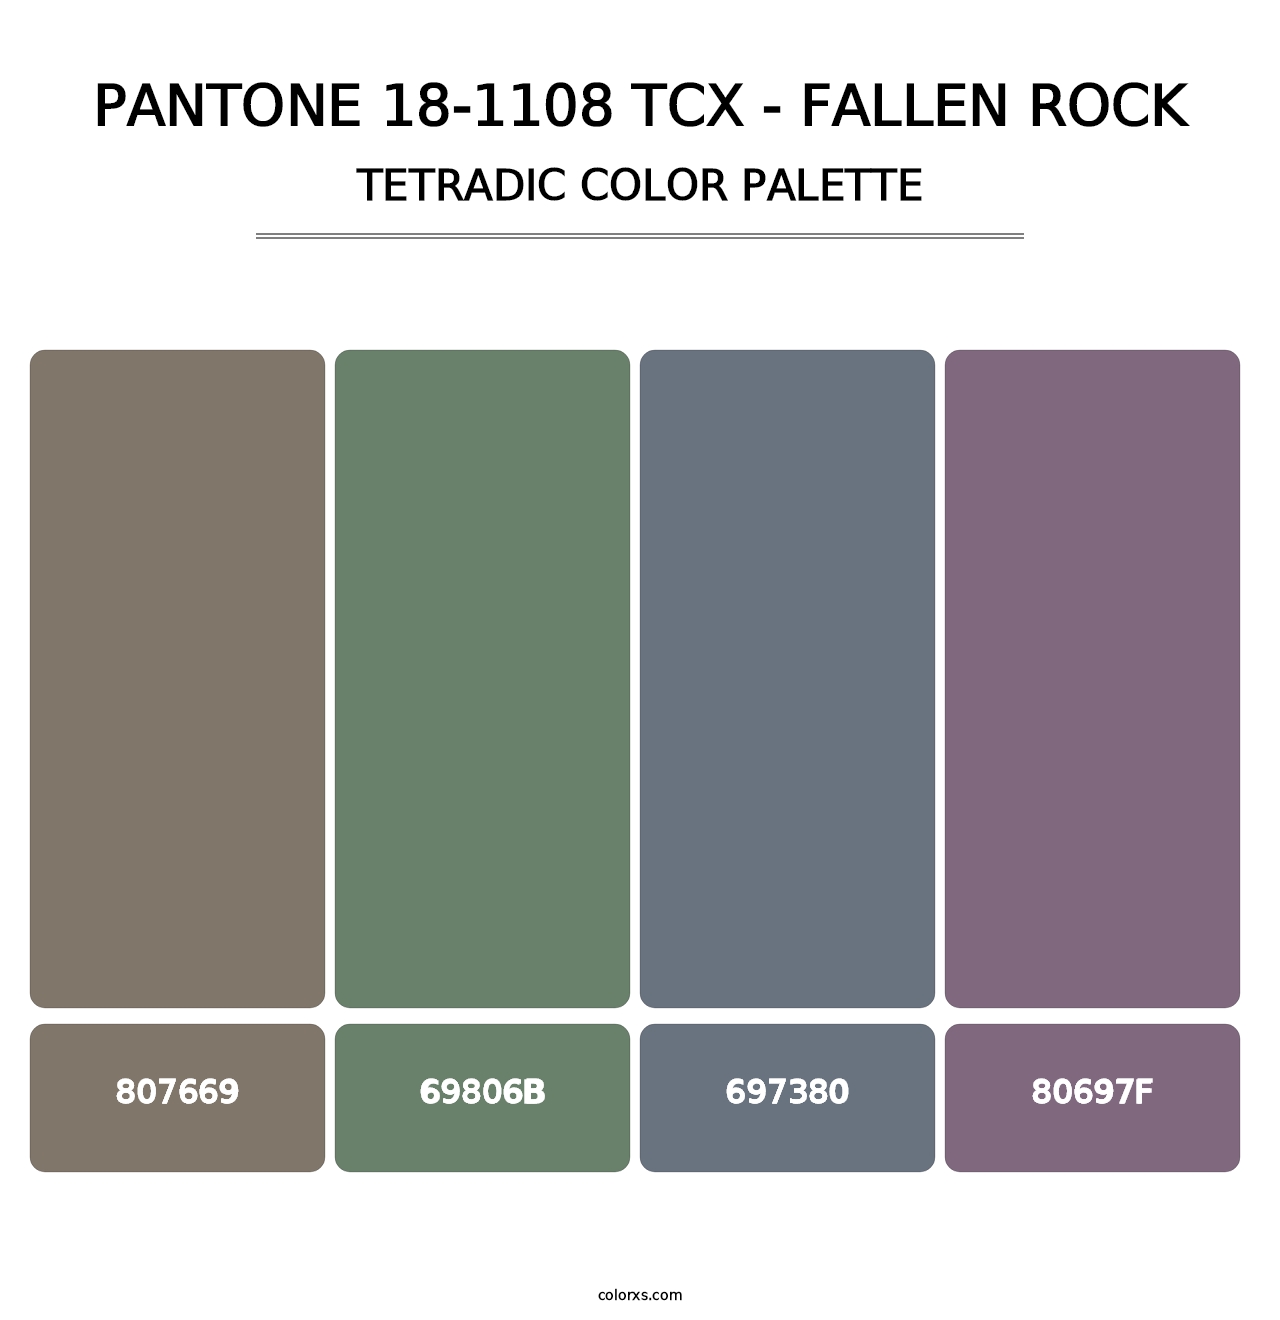 PANTONE 18-1108 TCX - Fallen Rock - Tetradic Color Palette